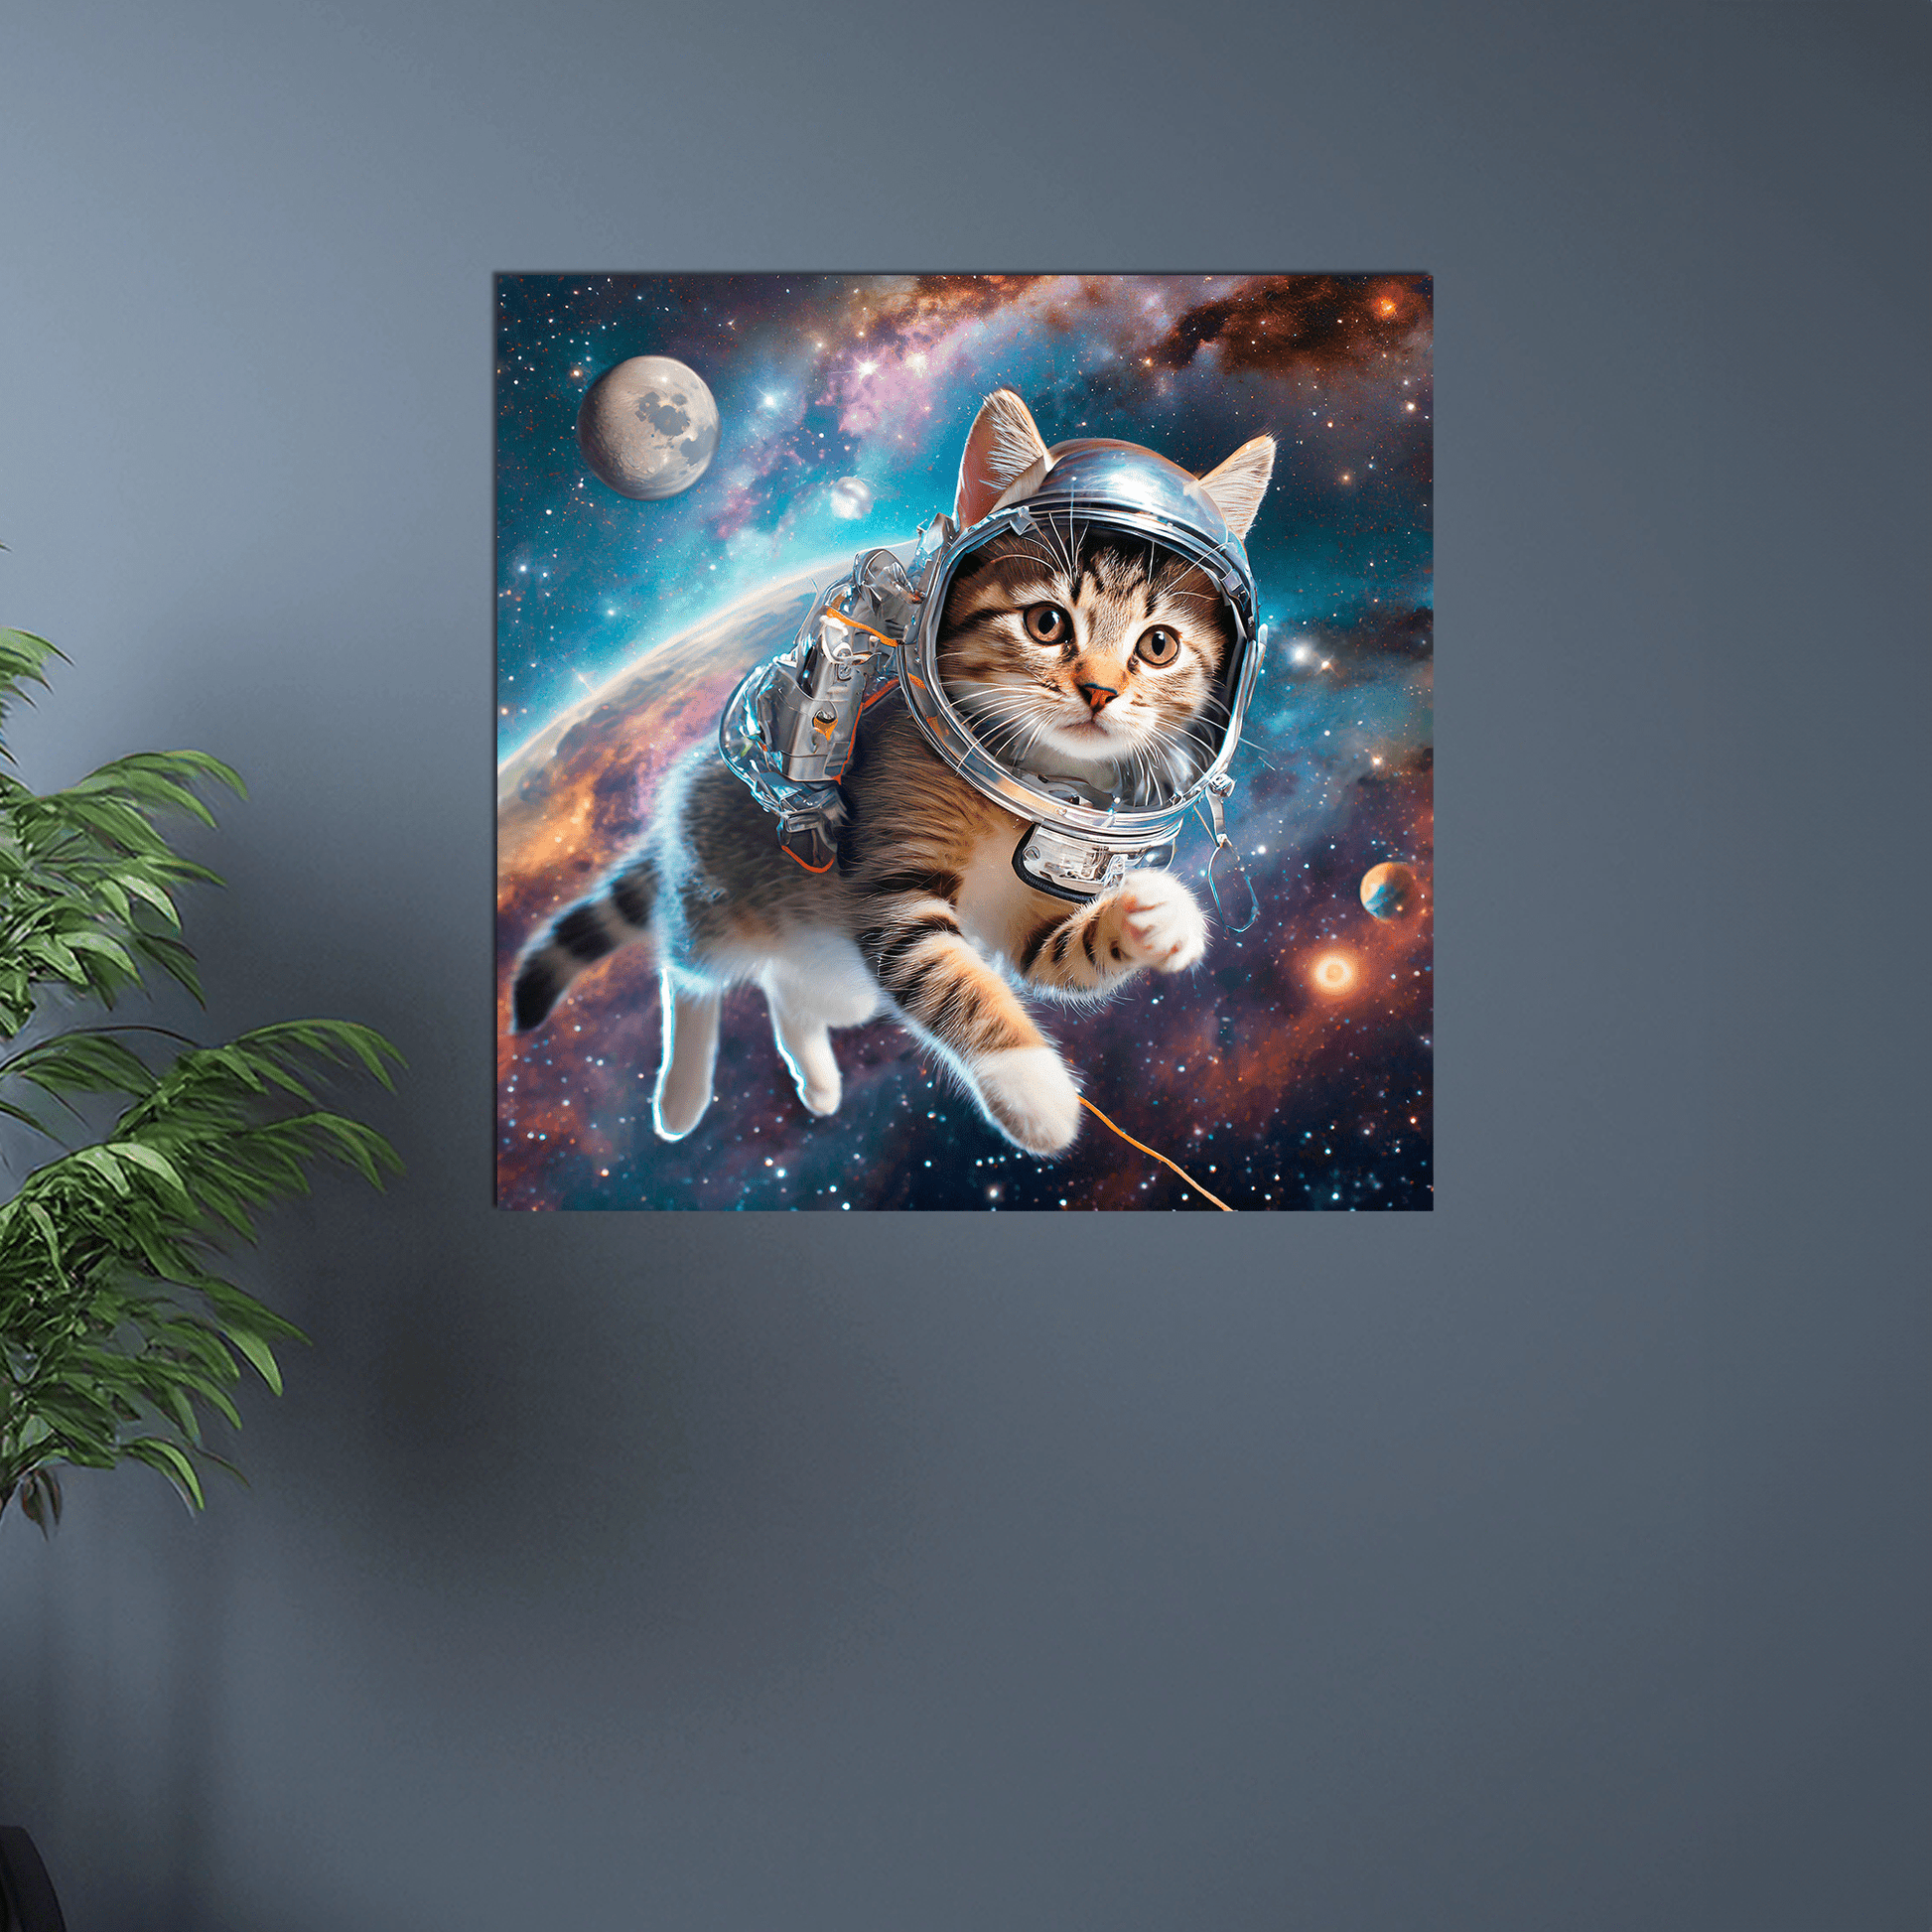 Cosmic Kittens Play with Space Yarn - Metal Poster - Premium Metal Print